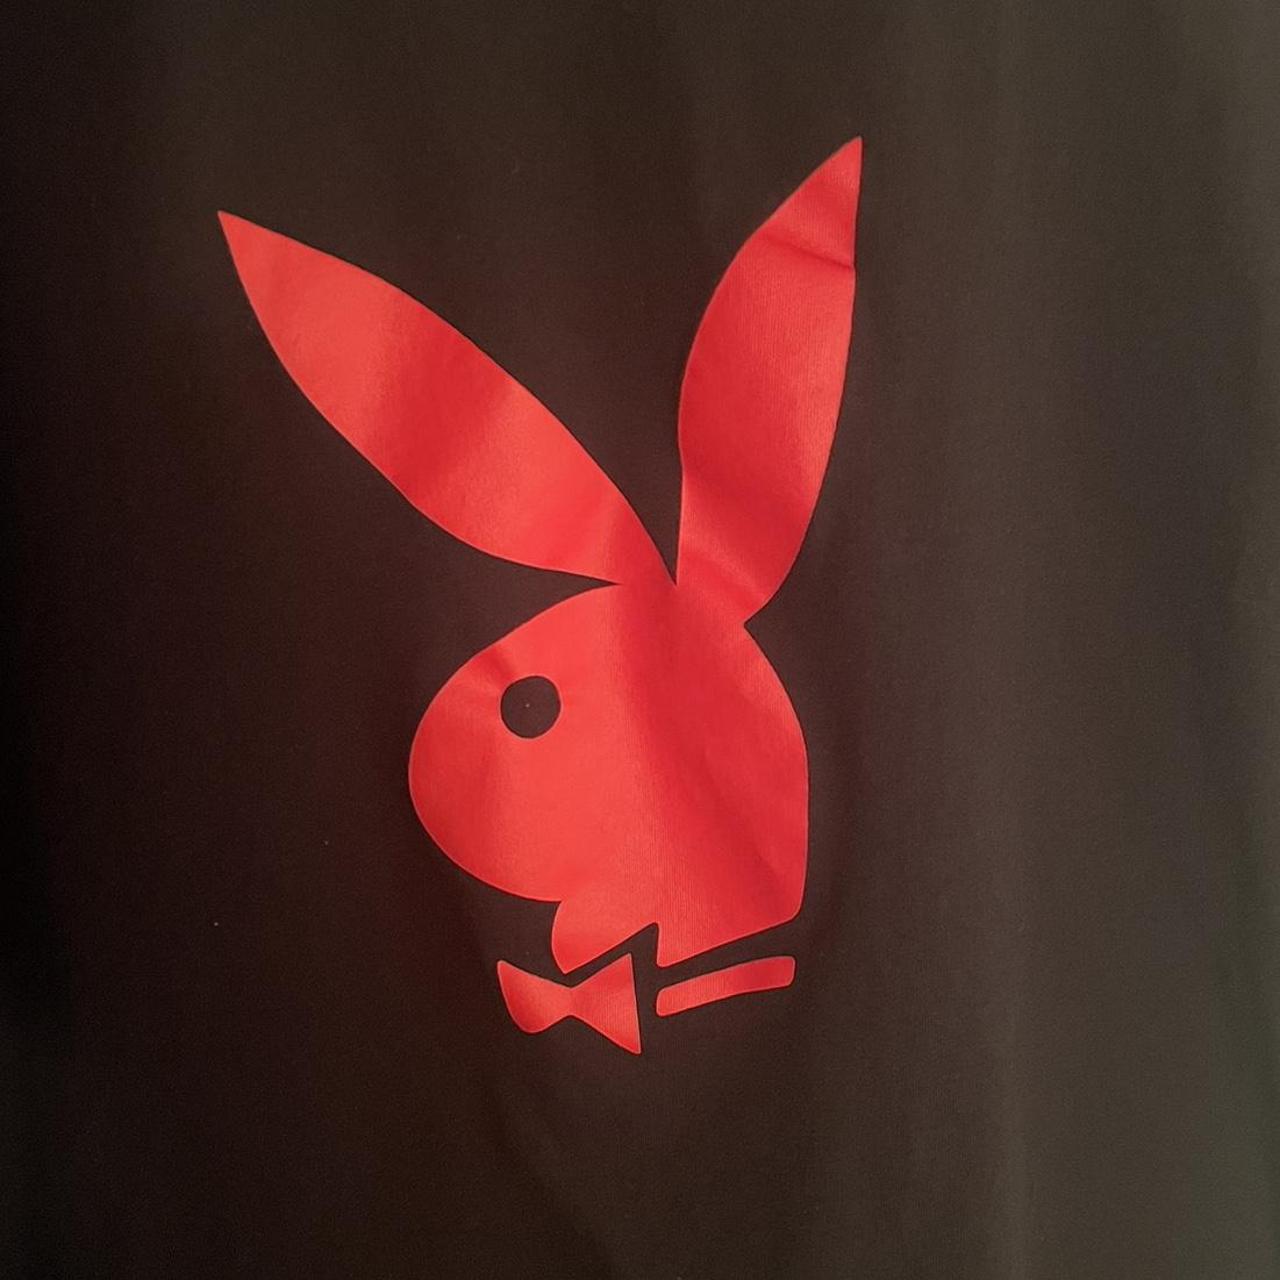 100% cotton Playboy pop-art tshirt. classic playboy - Depop